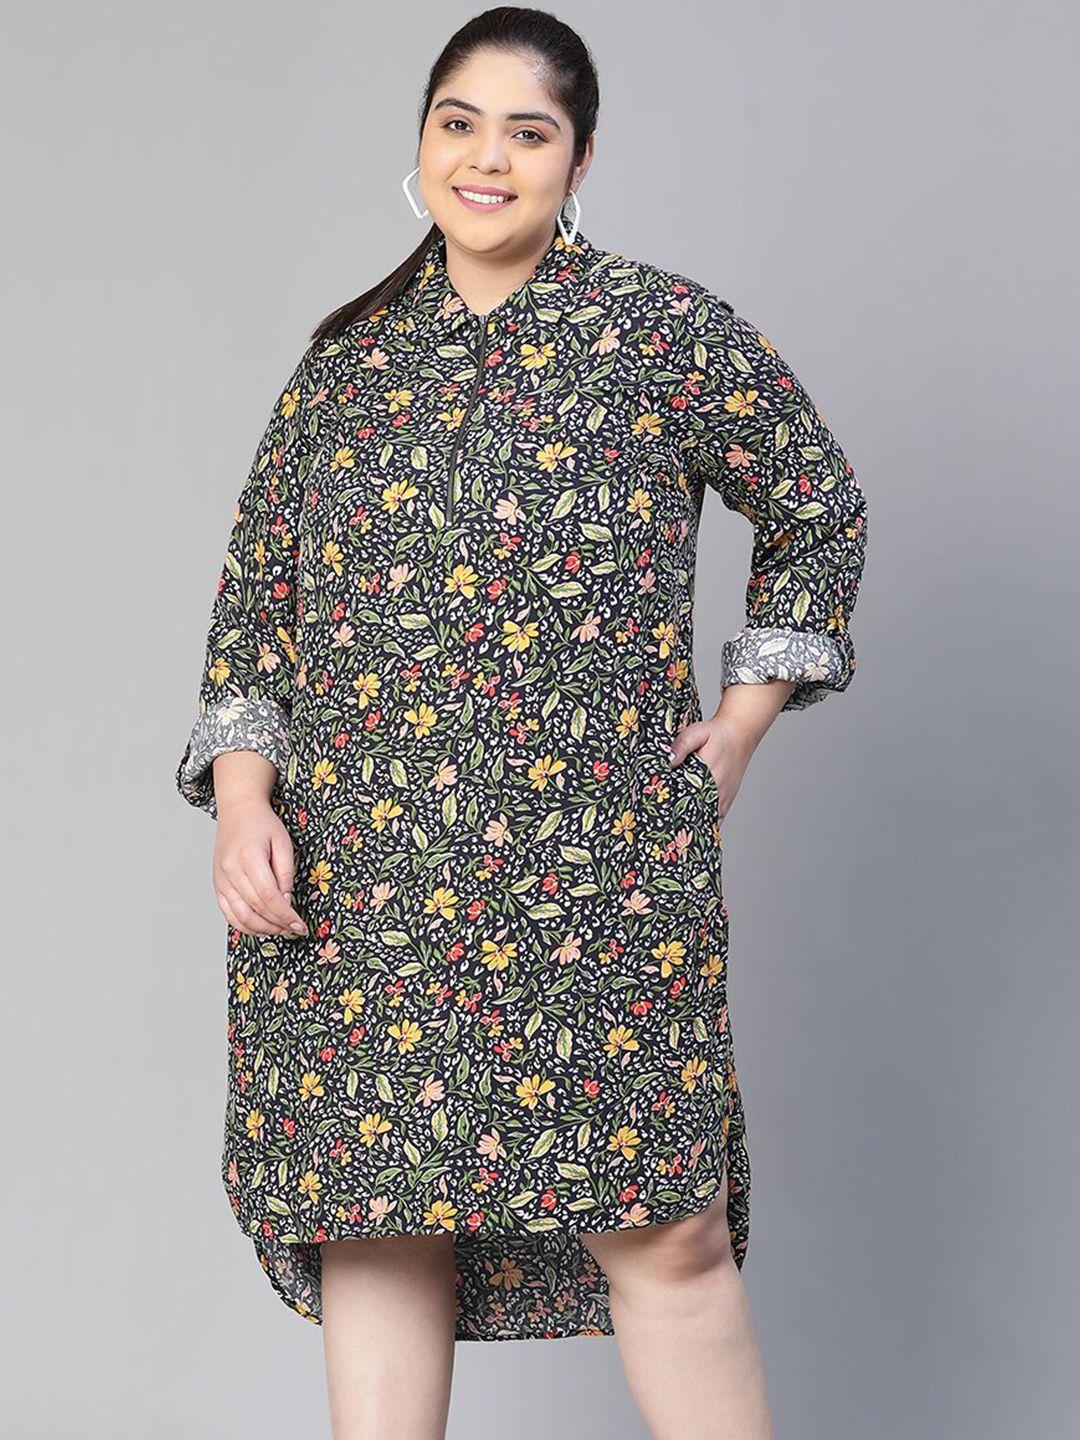 oxolloxo plus size floral printed shirt midi dress